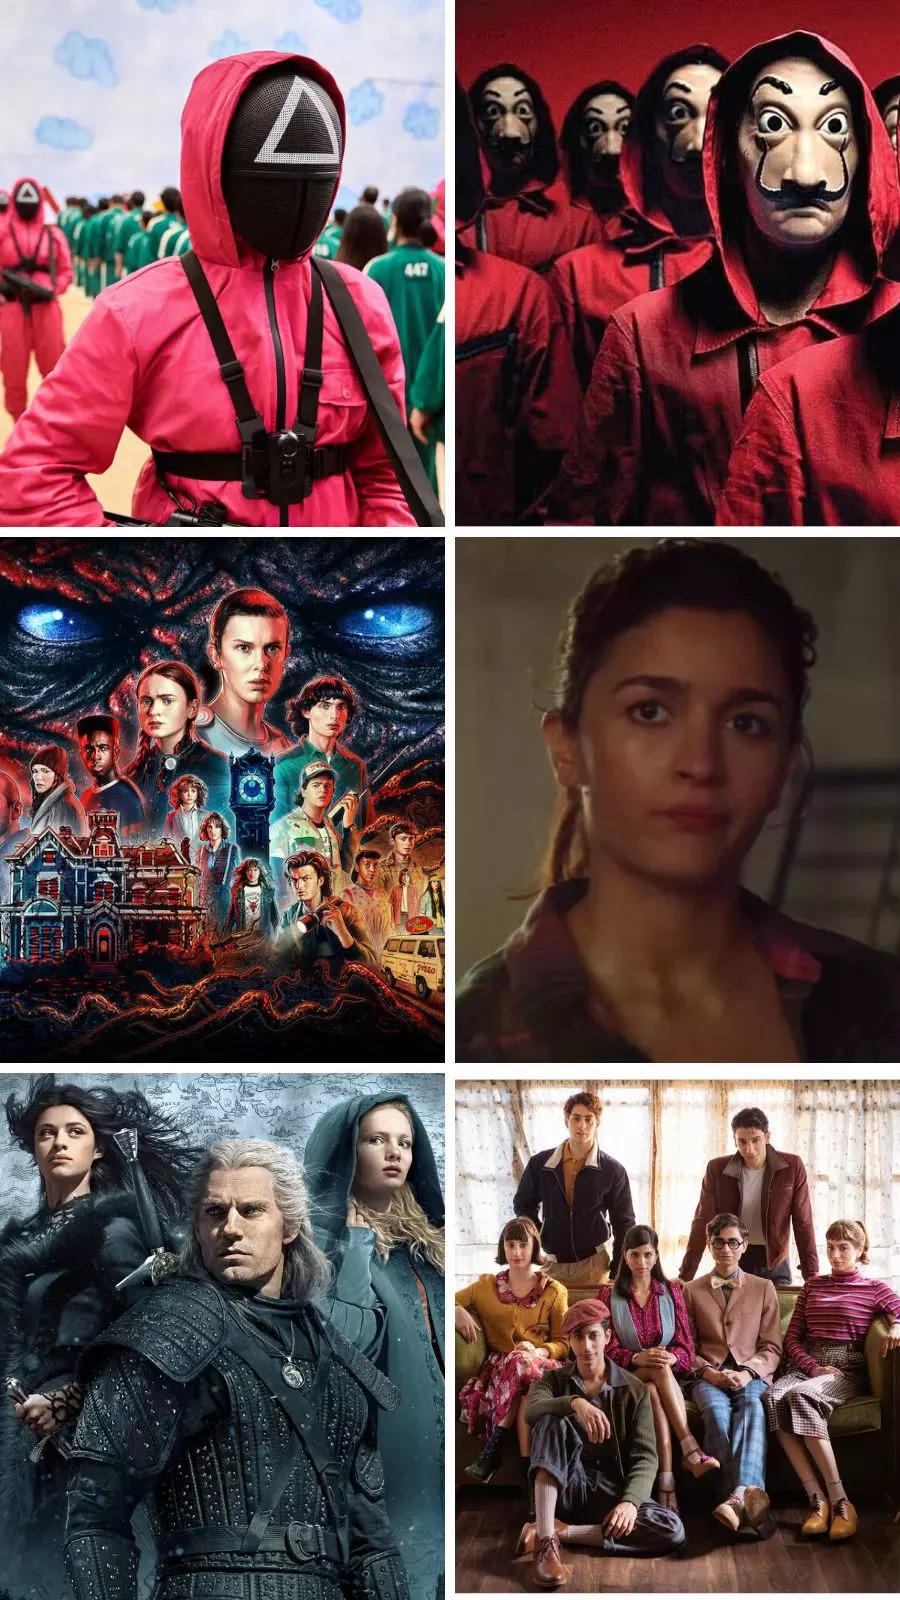 Stranger Things' Releases Season 4 Character Posters - Netflix Tudum